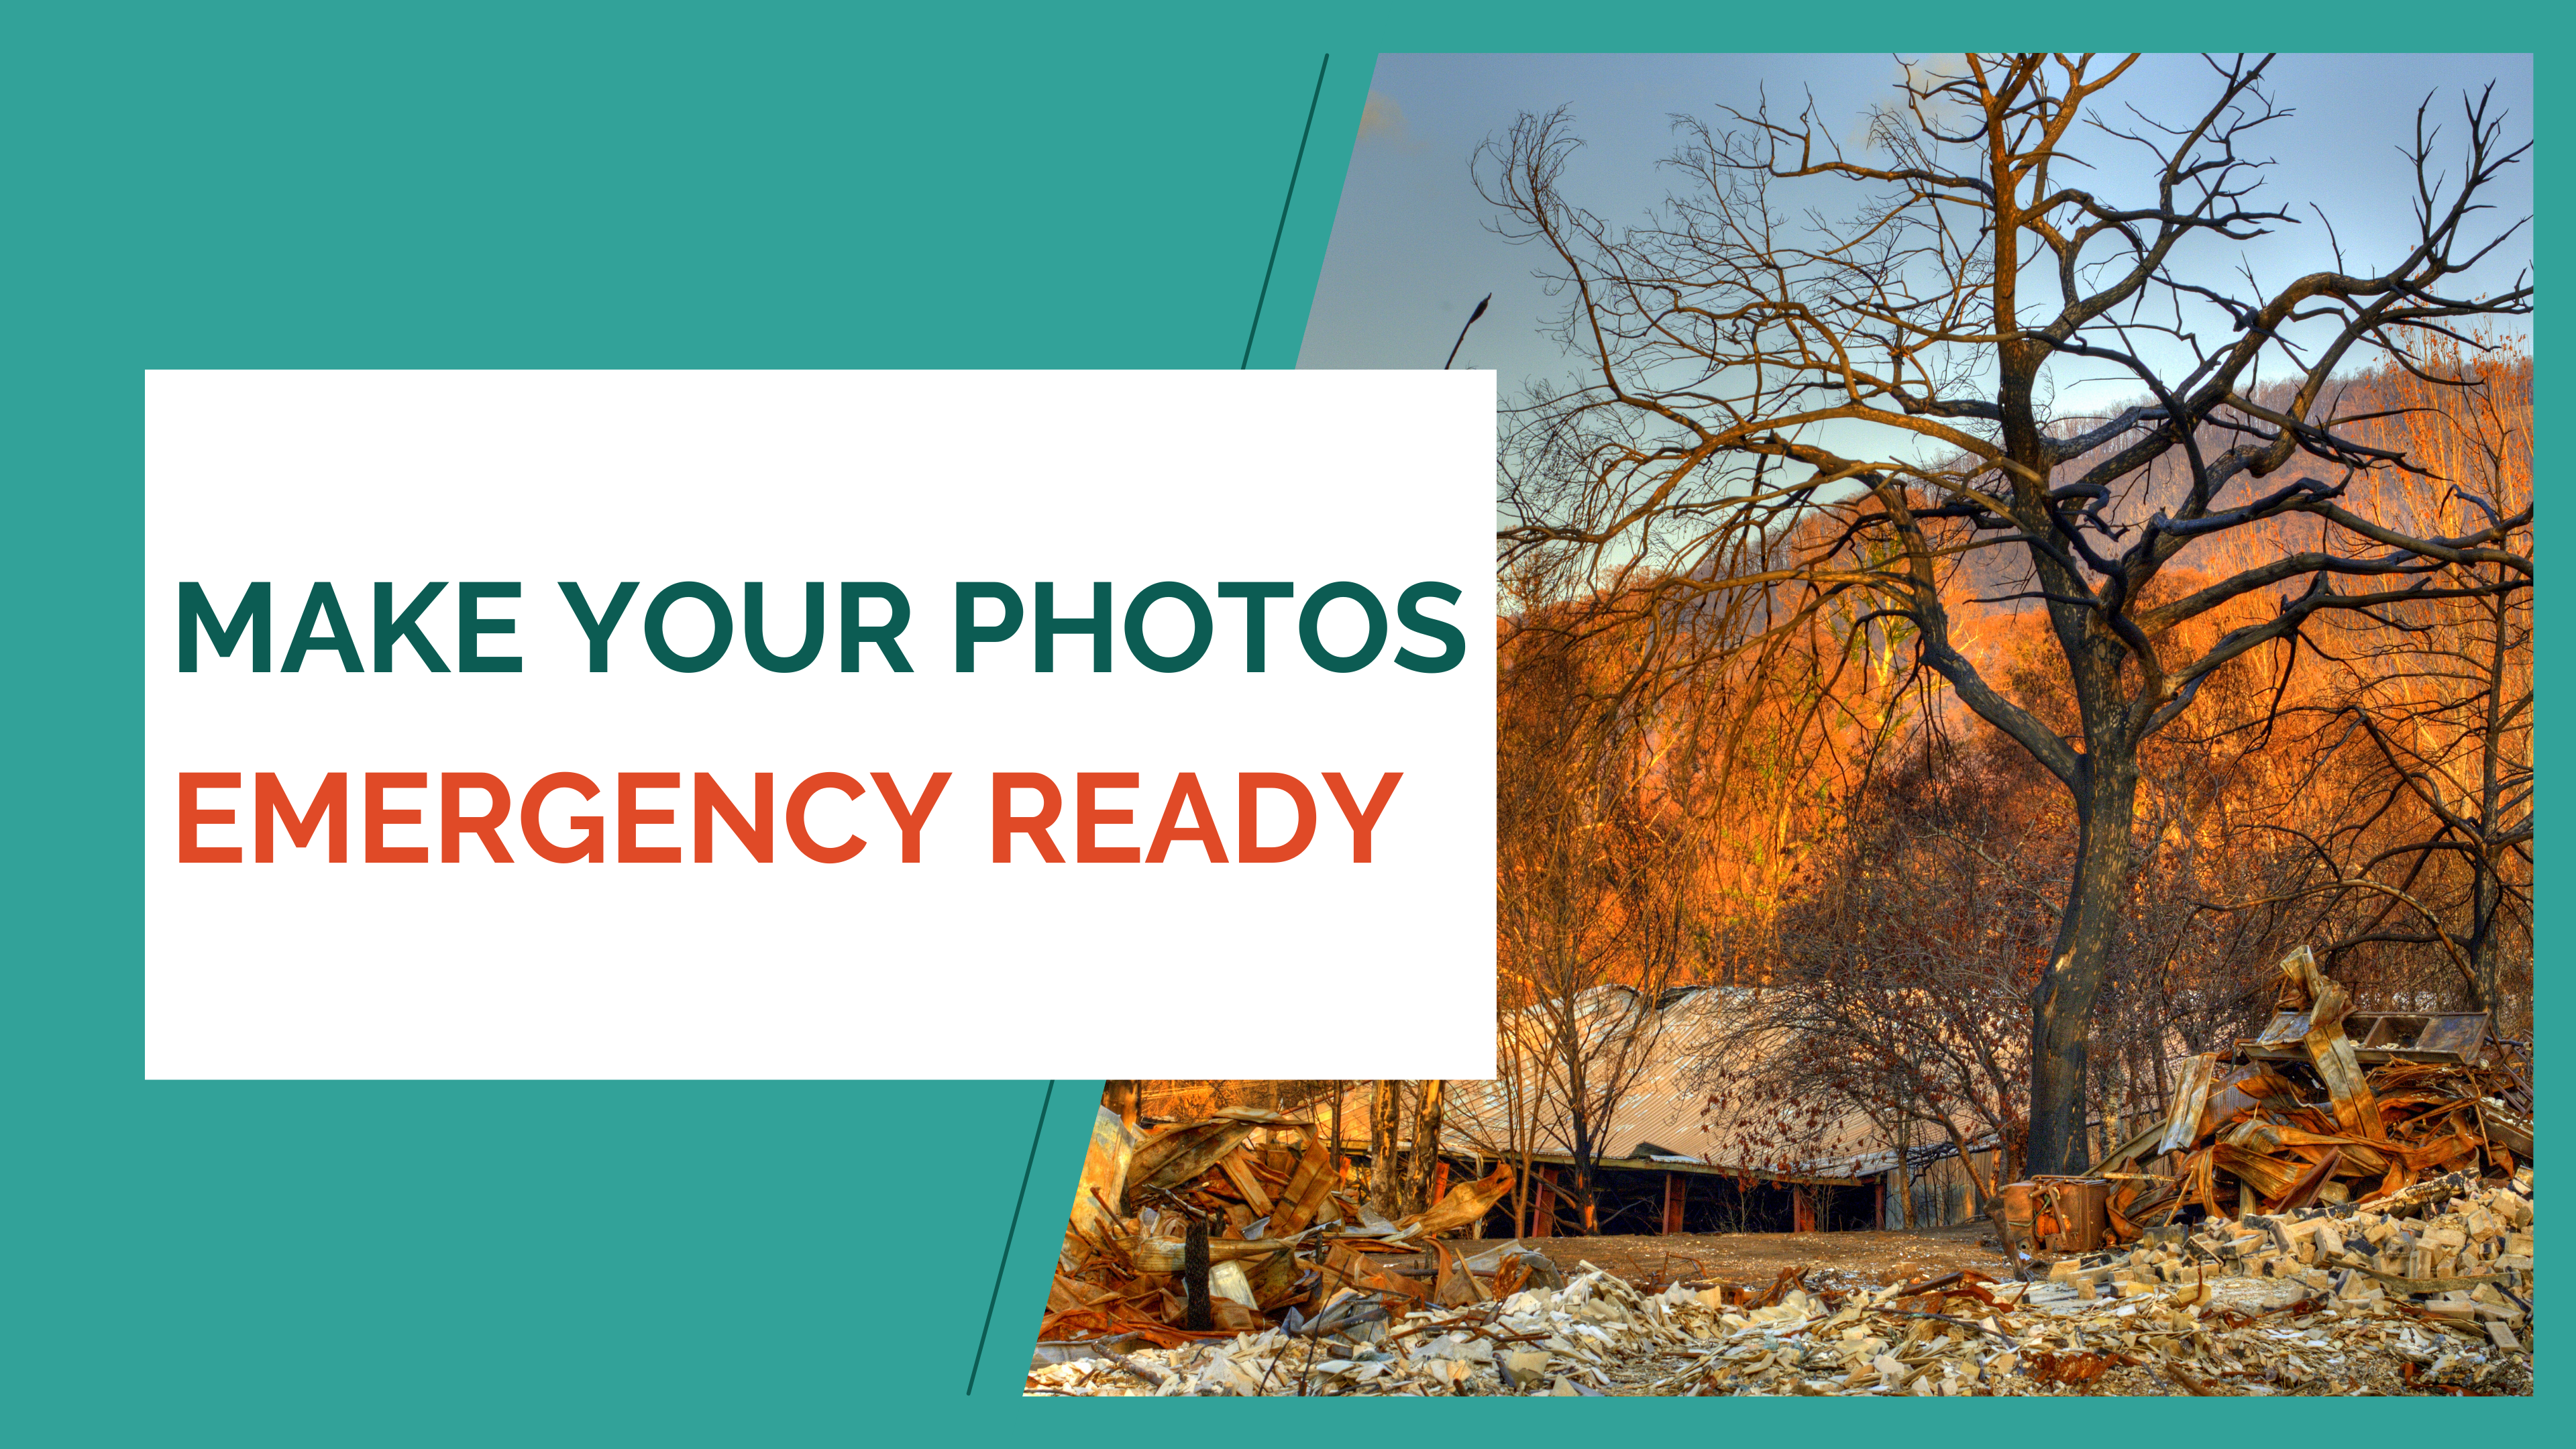 Make your photos emergency ready